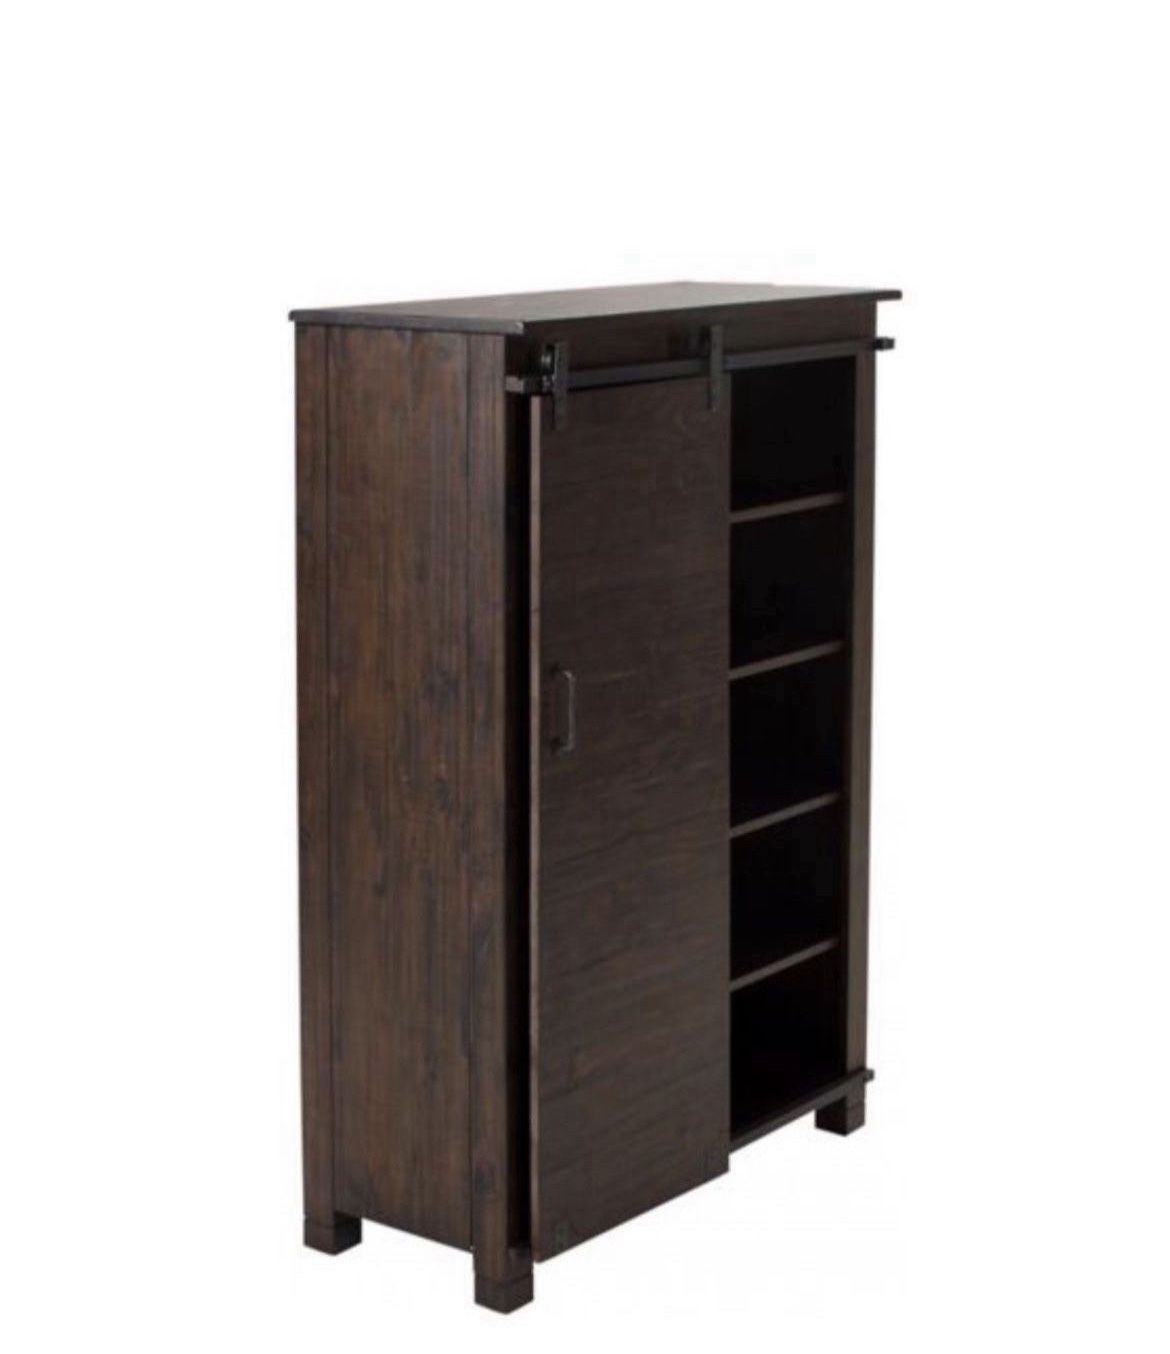 LIKE NEW - Large Dresser Wardrobe - Solid Wood